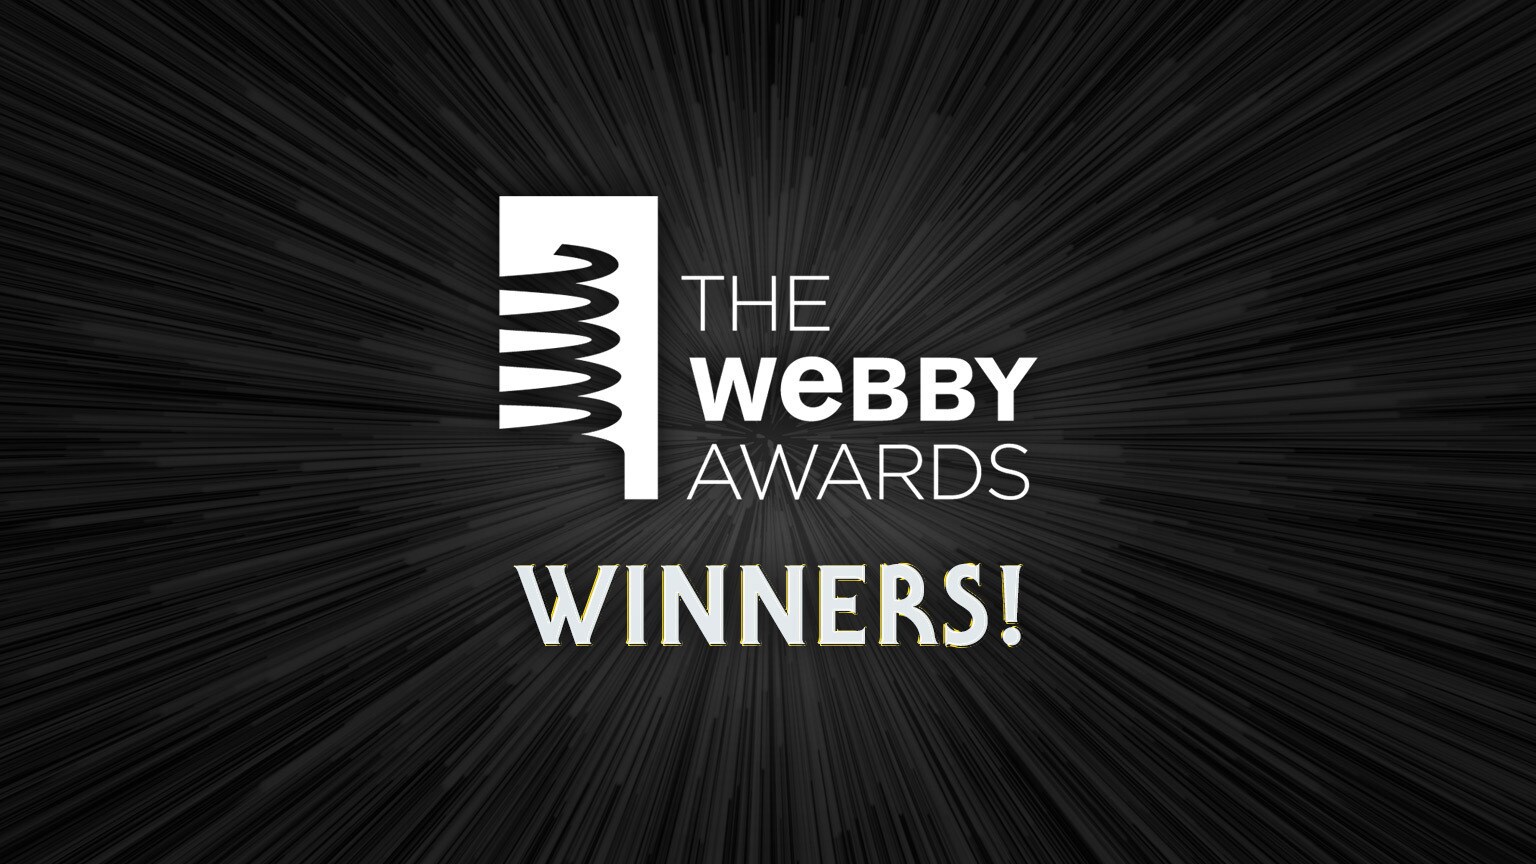 Star Wars Wins 3 Webby Awards!